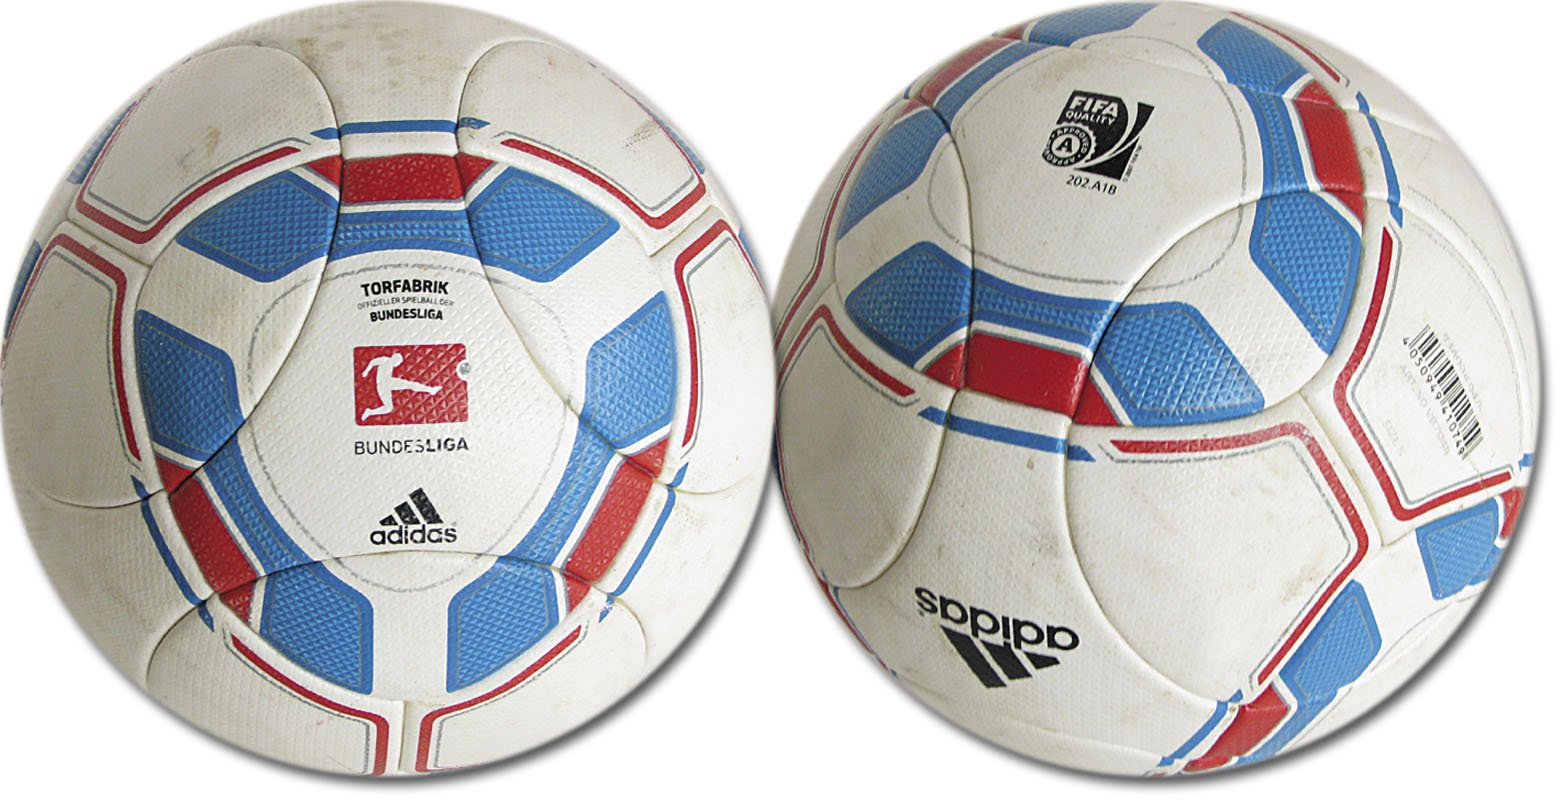 Match Worn Ball German Bundesliga 2011 12 Adidas Agon Sportsworld Online Shop